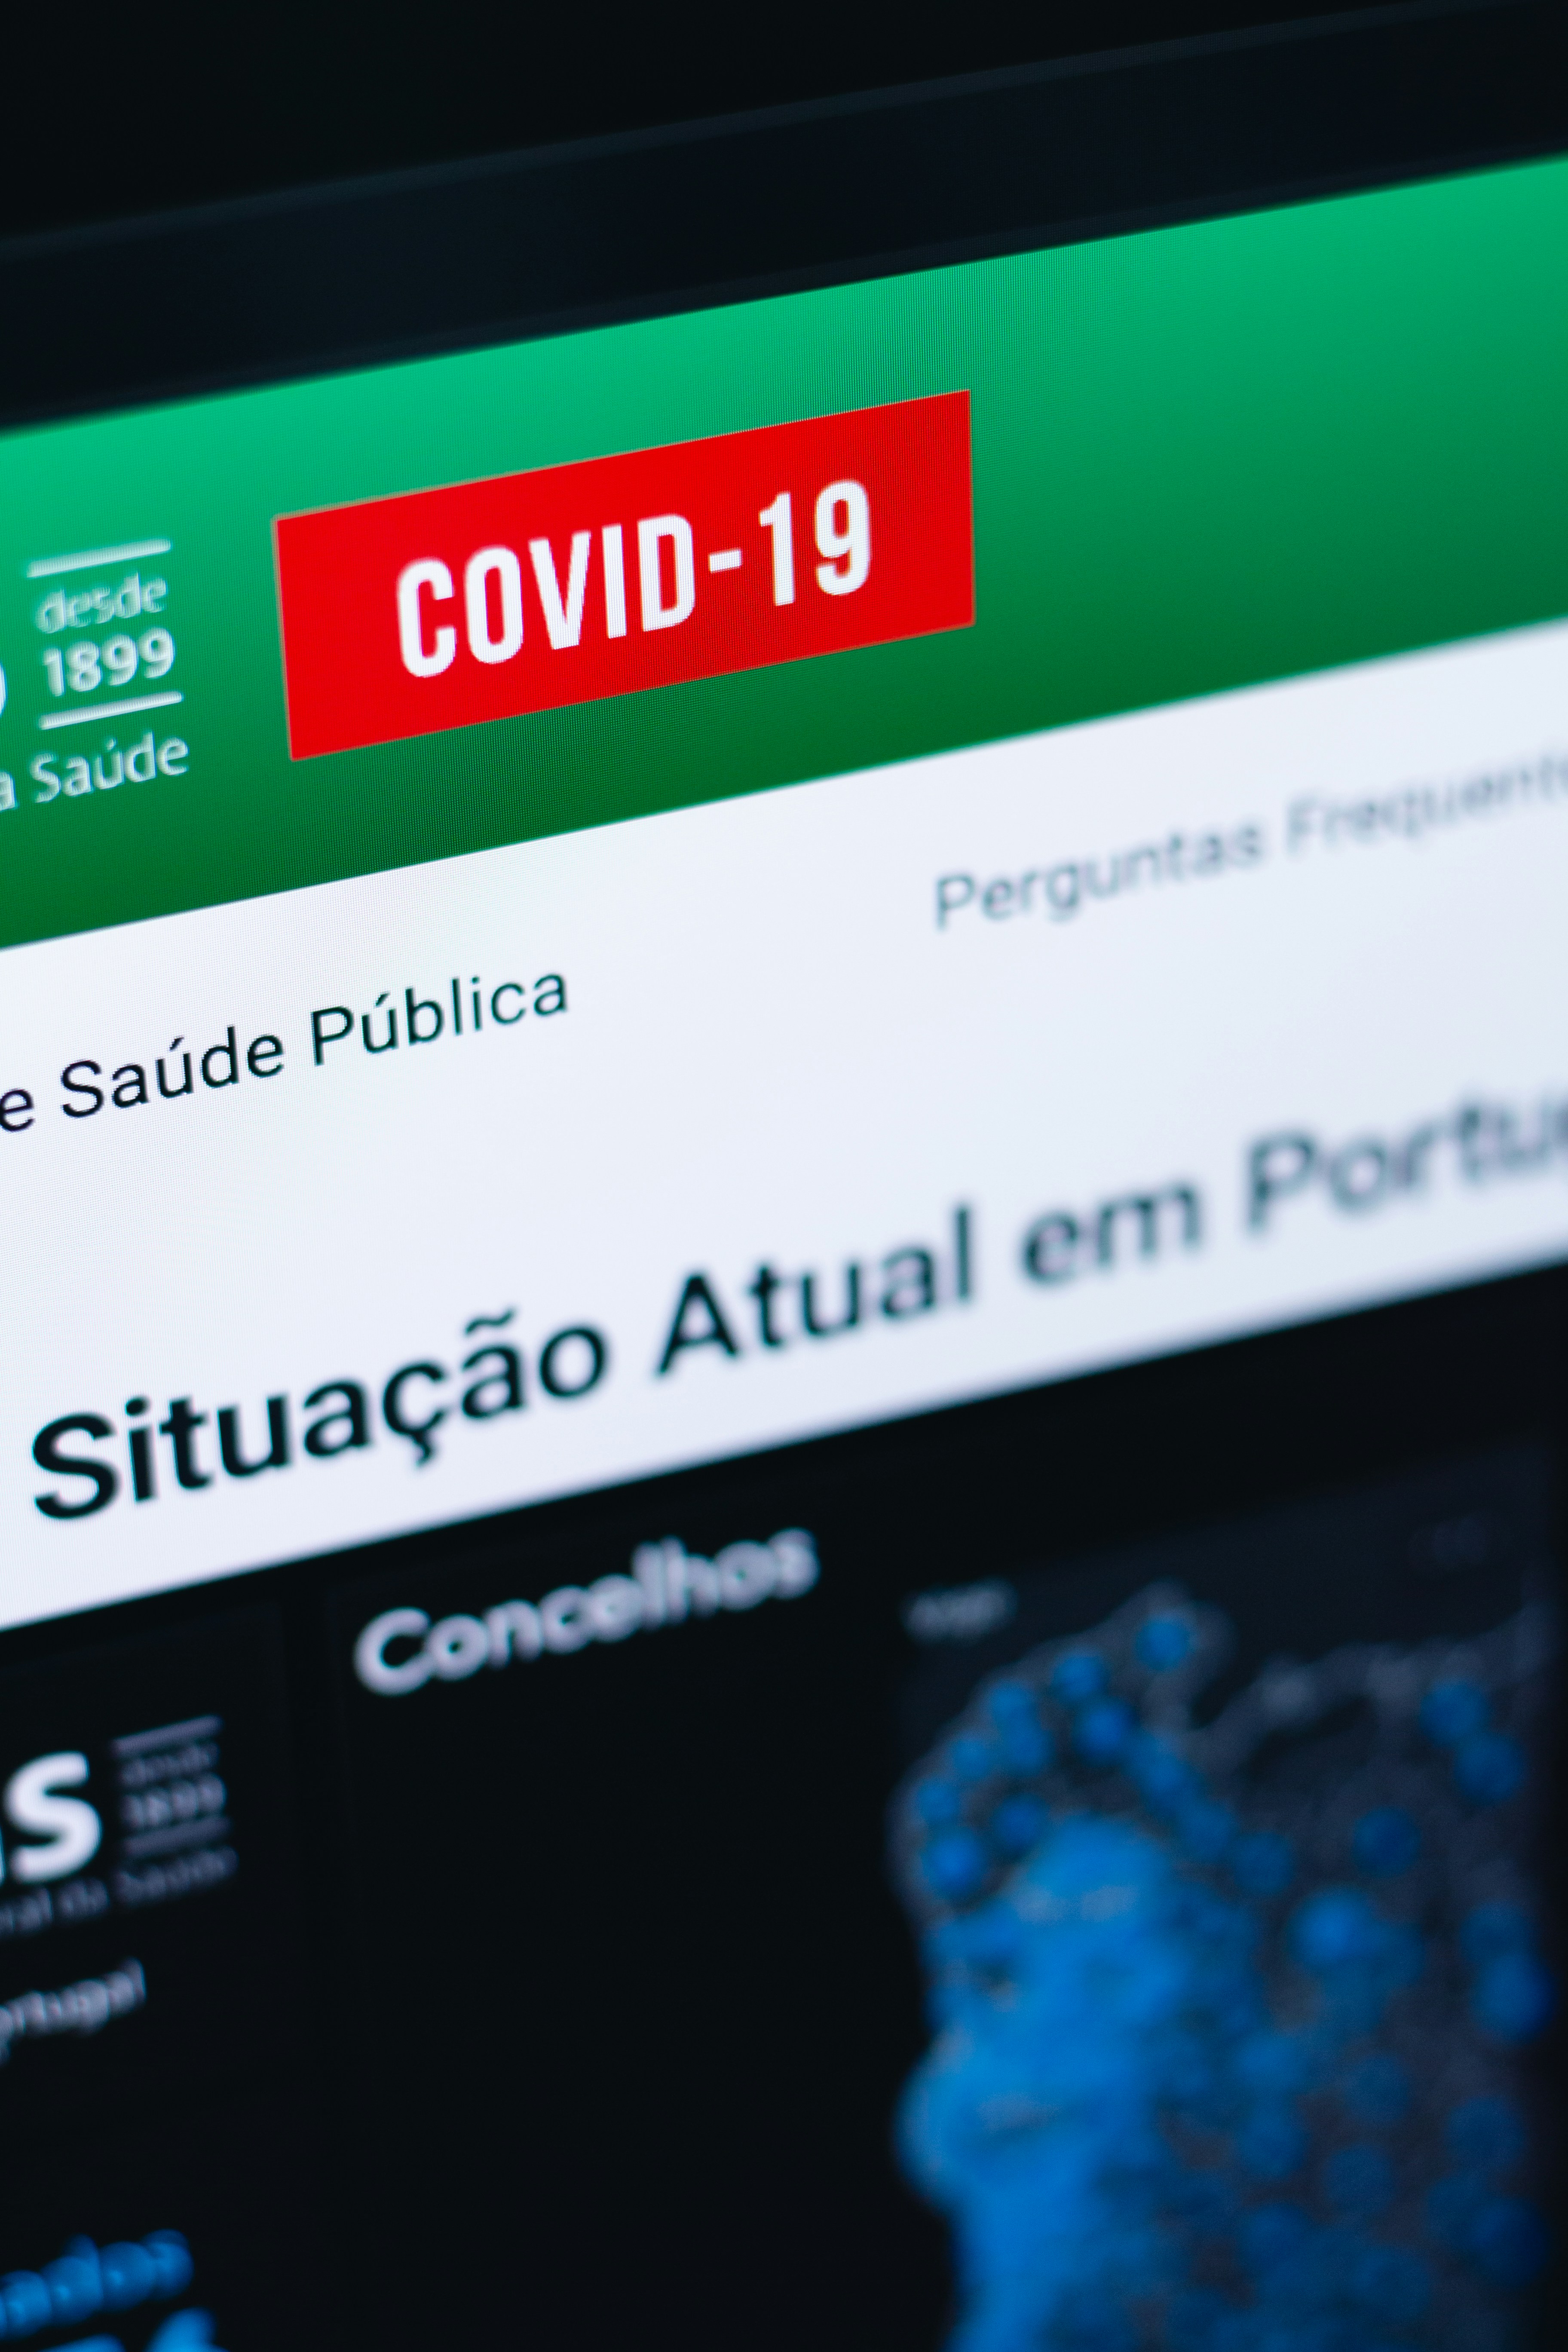 Coronavírus em Portugal (9.04.2020) Fonte: www.covid19.min-saude.pt